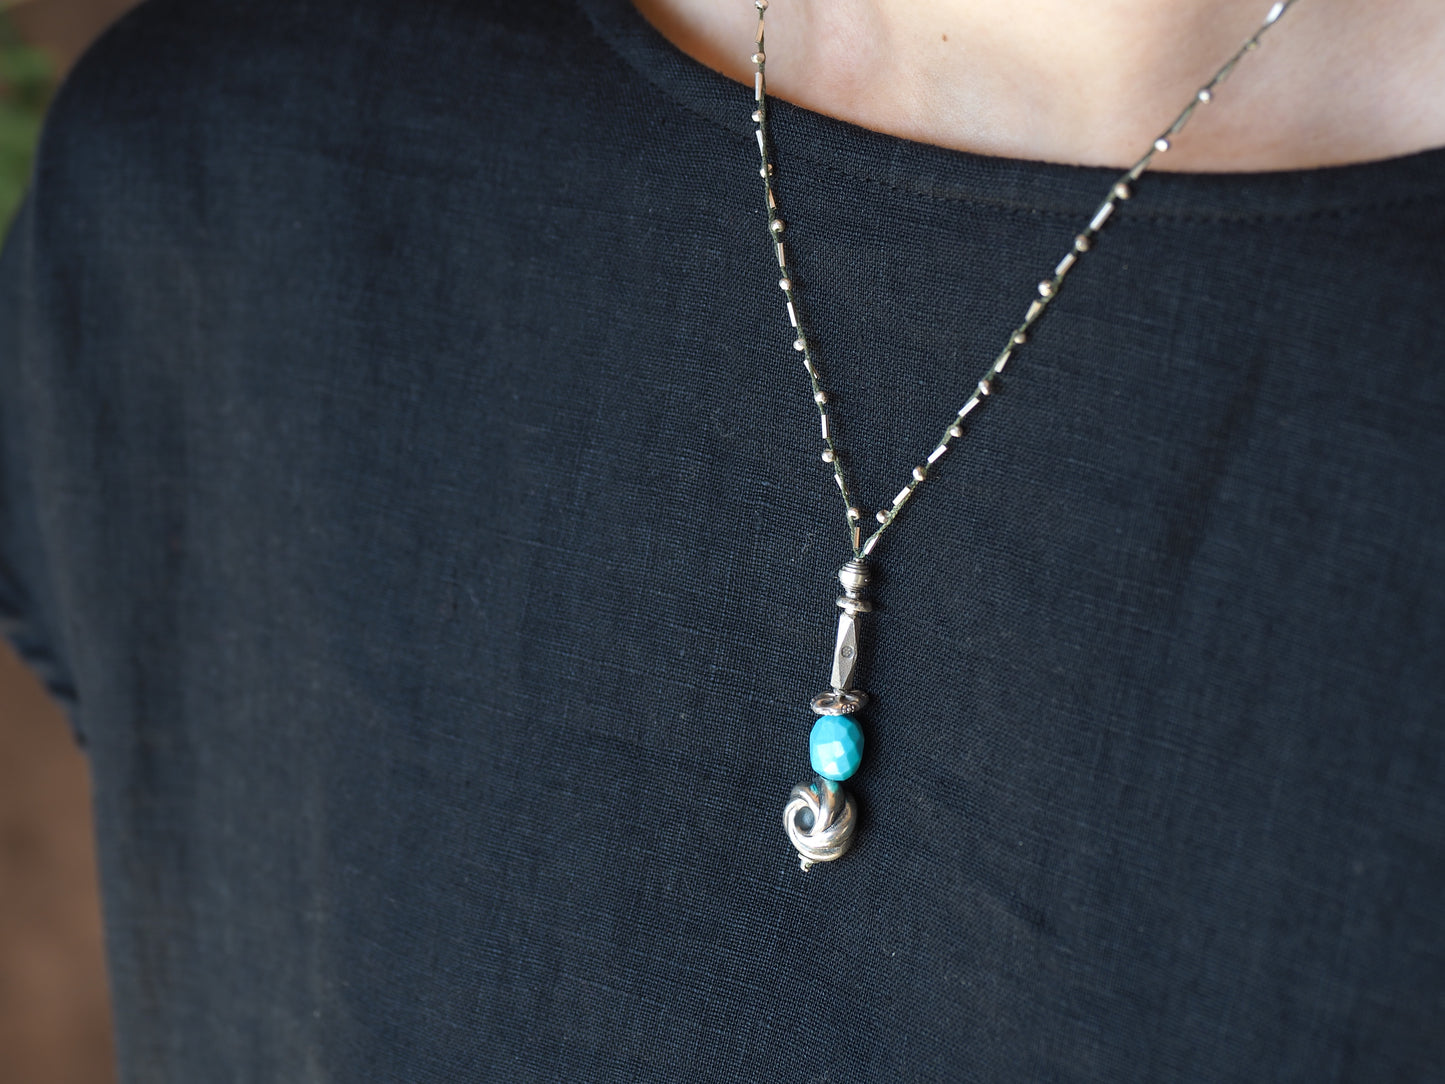 Sky blue turquoise amulet pendant 